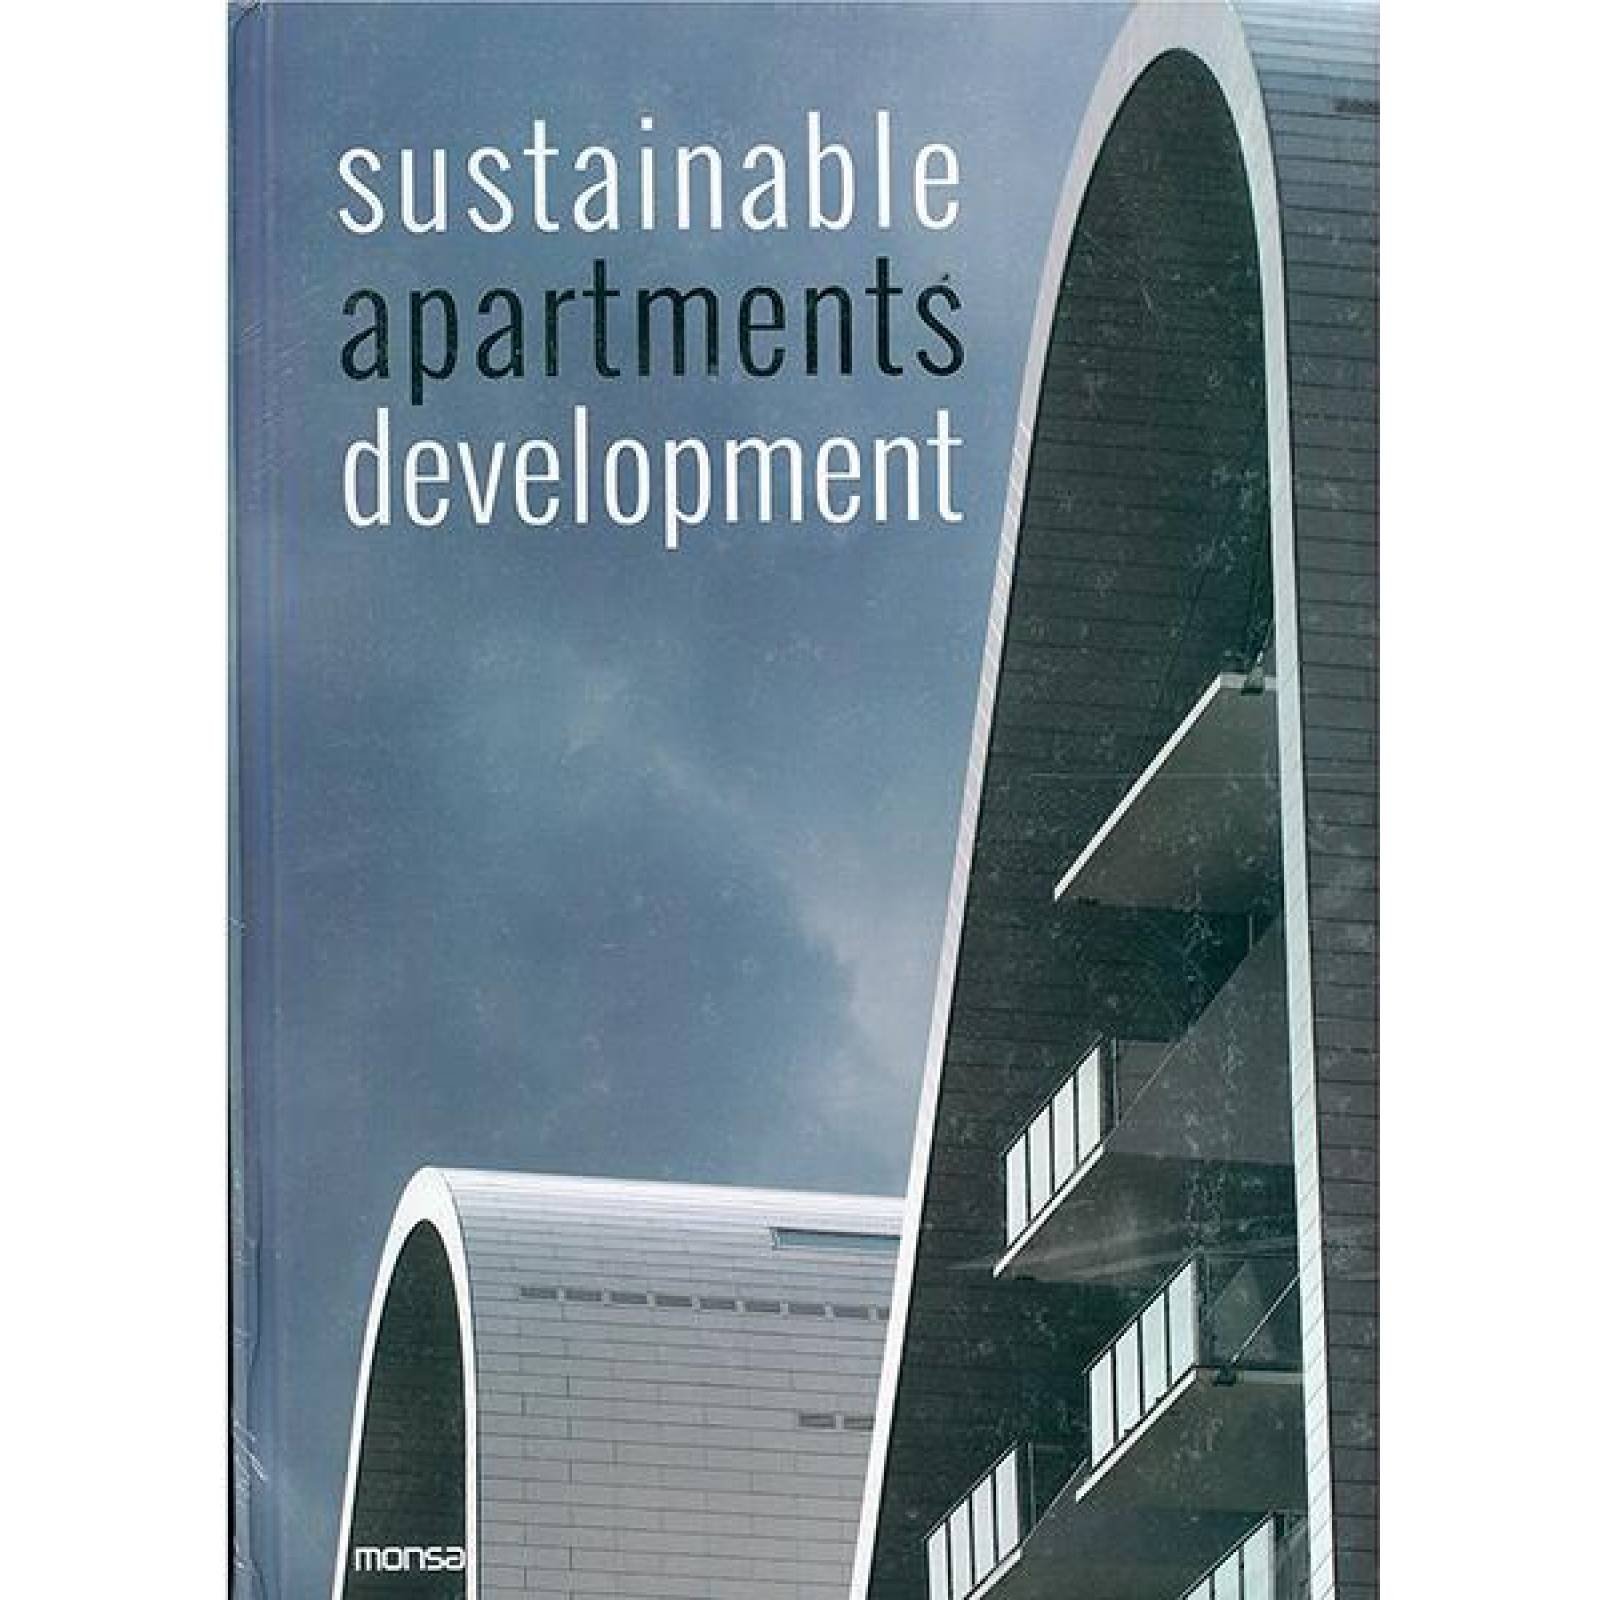 Sustainable apartments development 